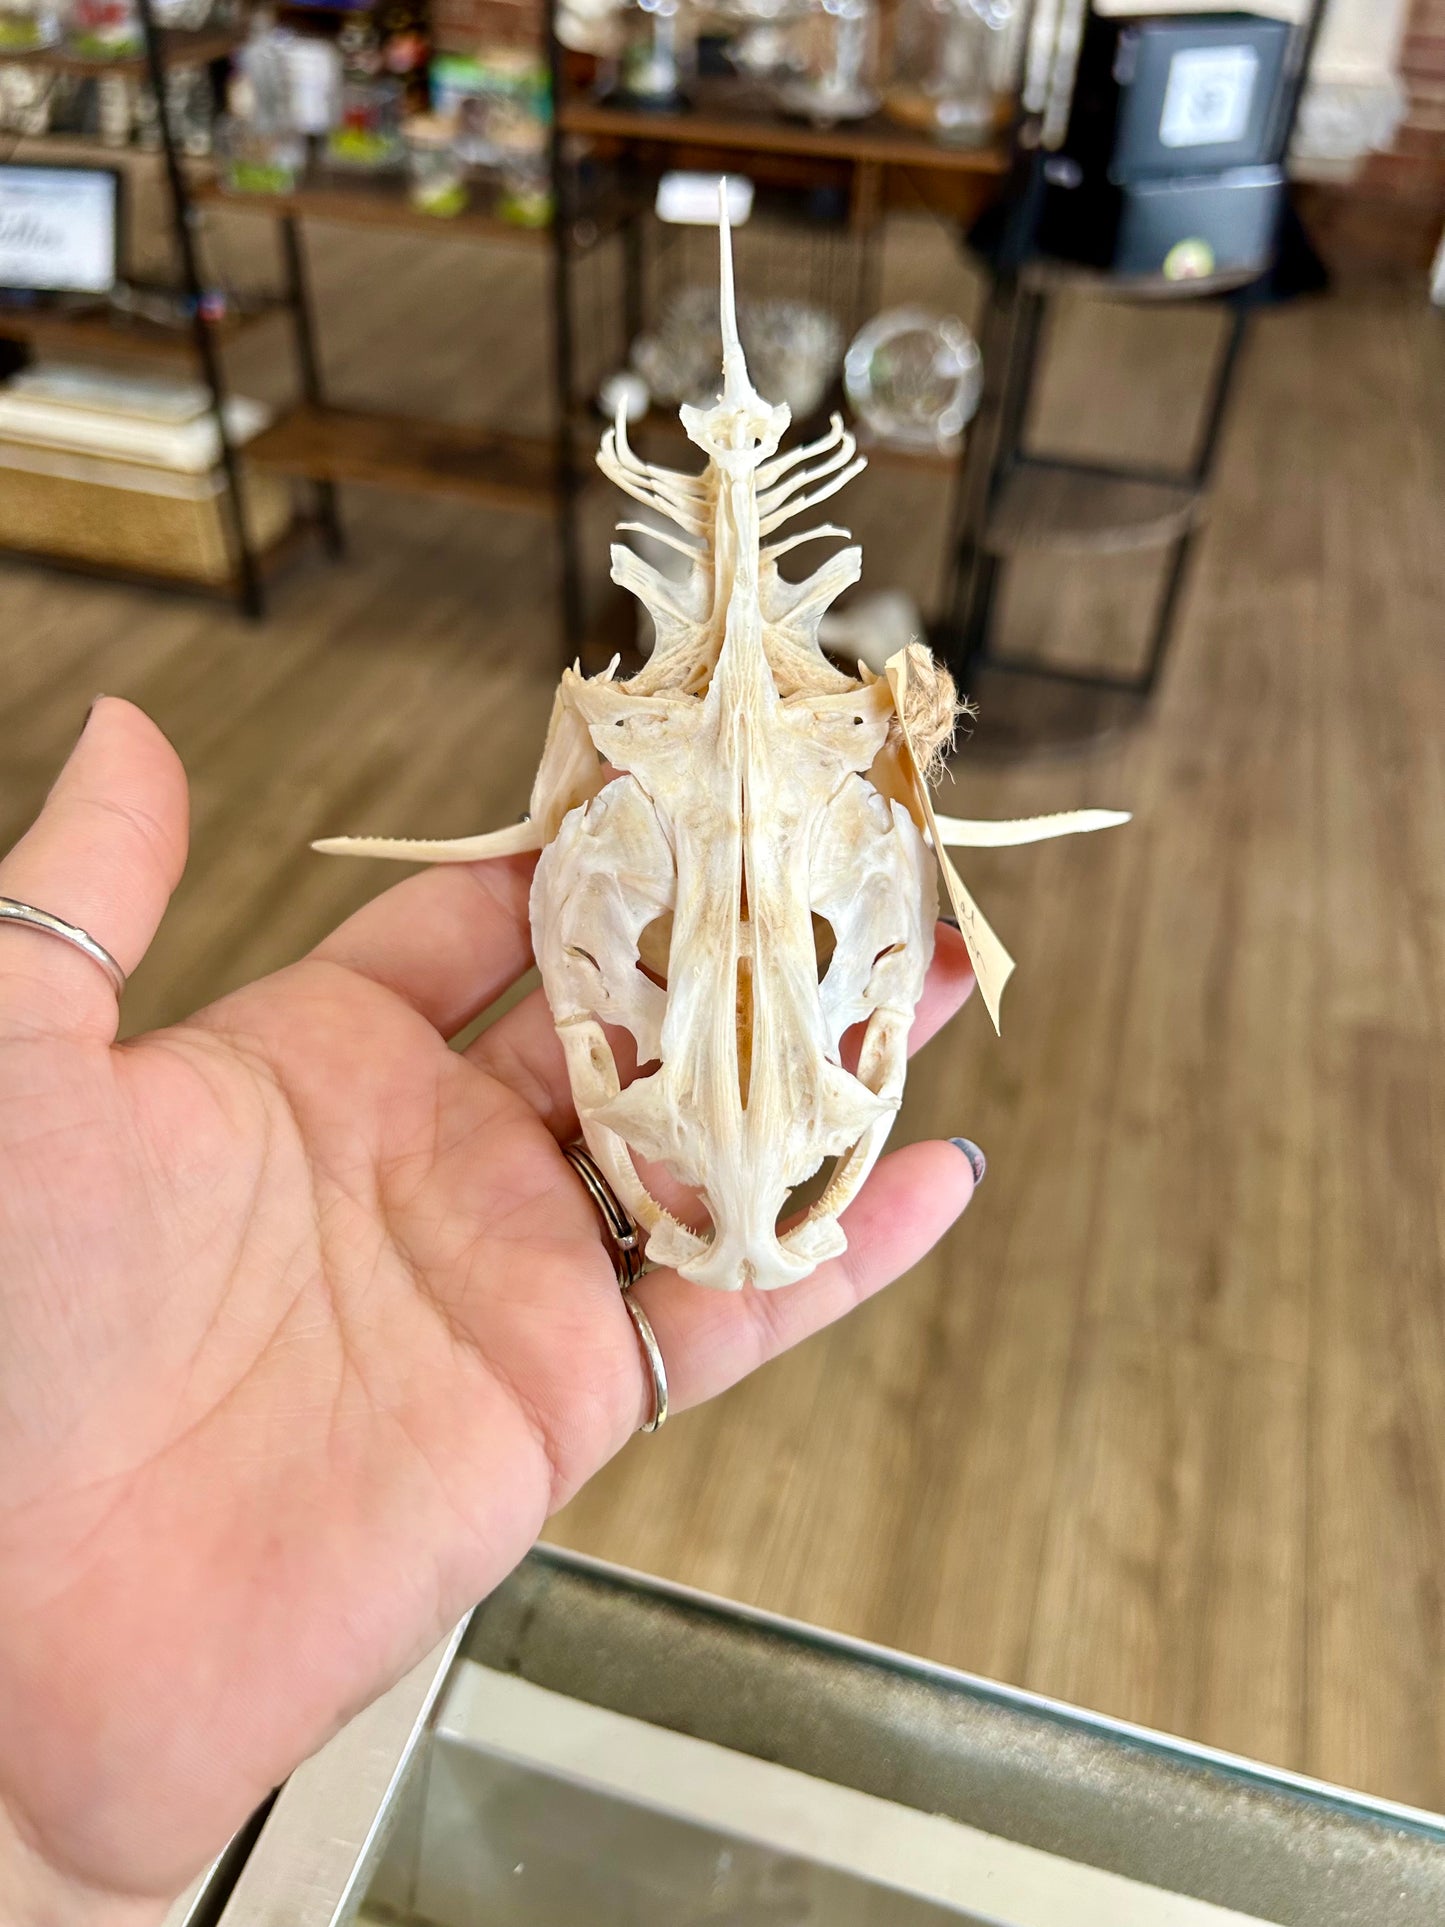 Channel Catfish Skull